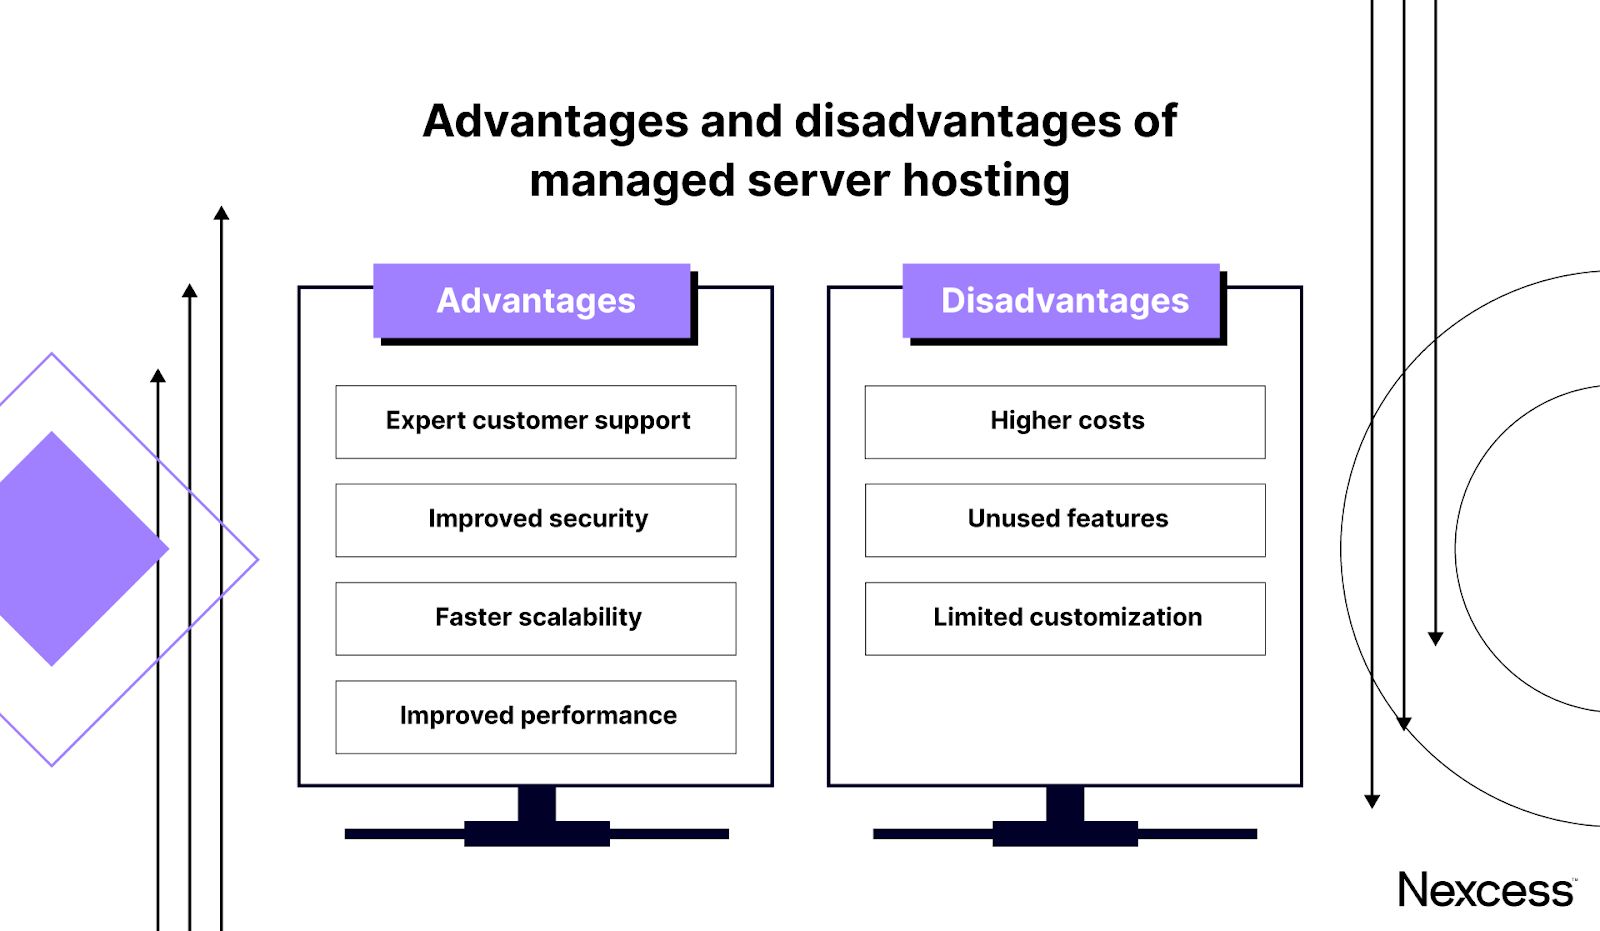 The advantages and disadvantages of managed server hosting.